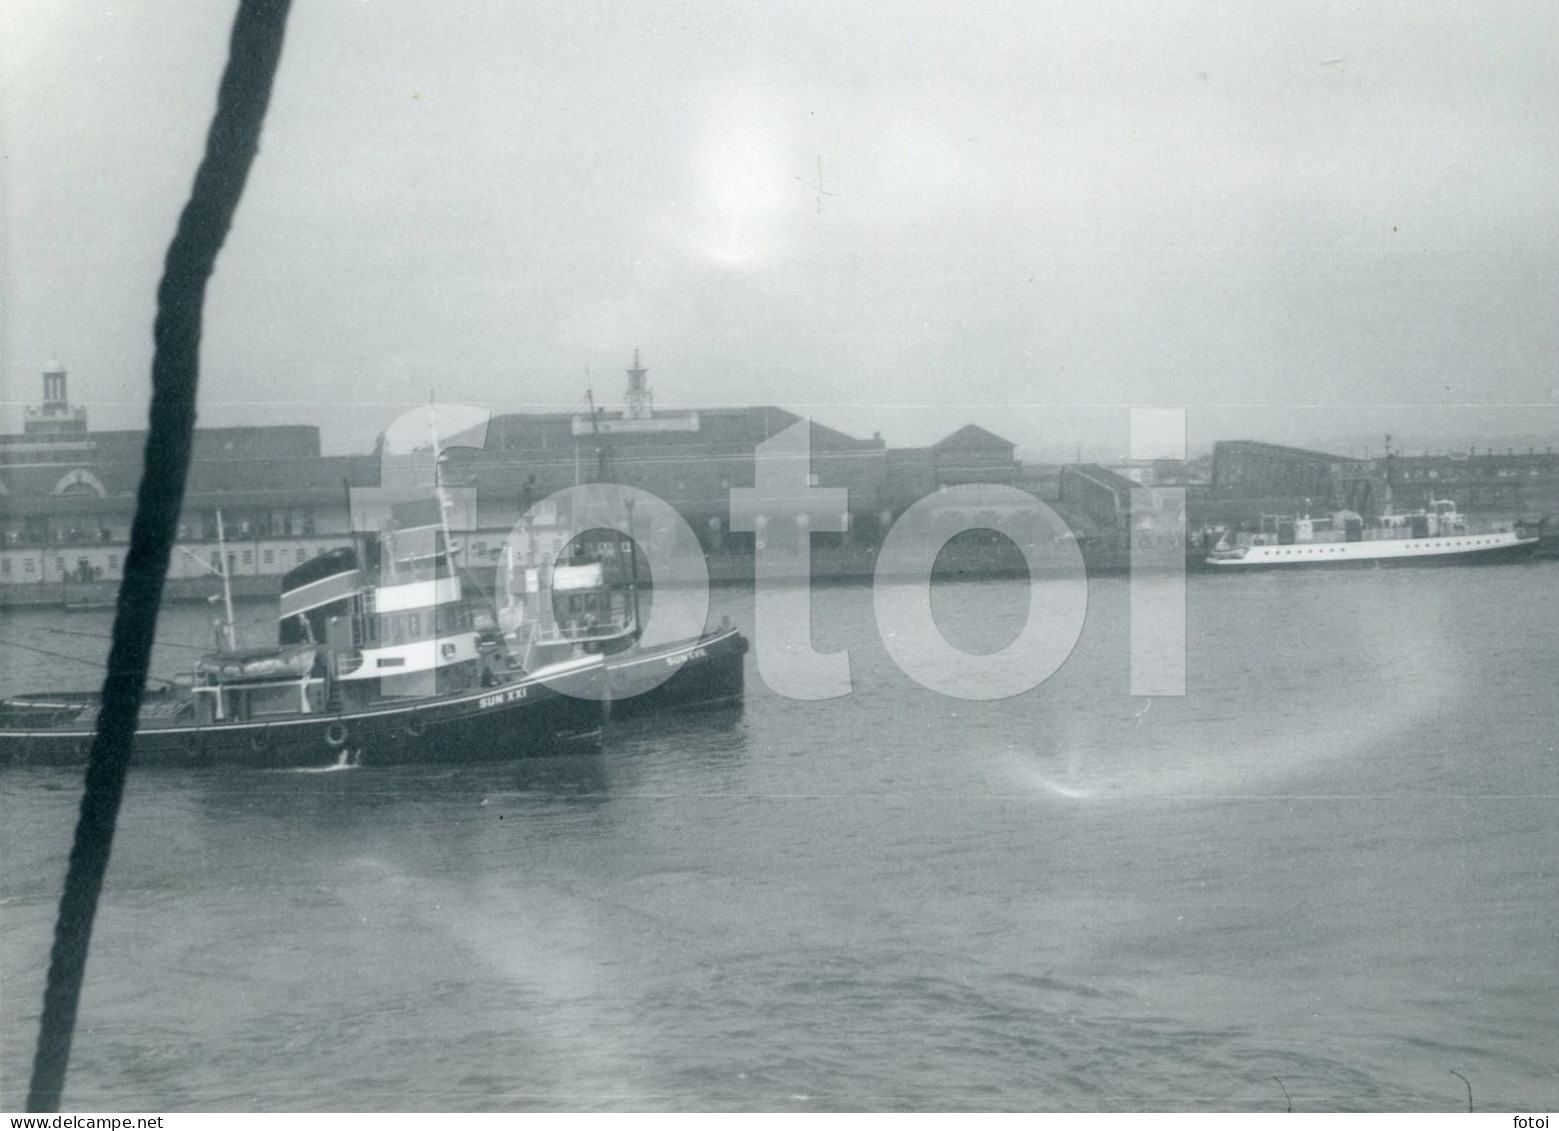 60S REAL ORIGINAL PHOTO FOTO SHIP TUGBOAT TUG SUN XXI THAMES RIVER ENGLAND UK REBOCADOR BATEAU AT447 - Boats